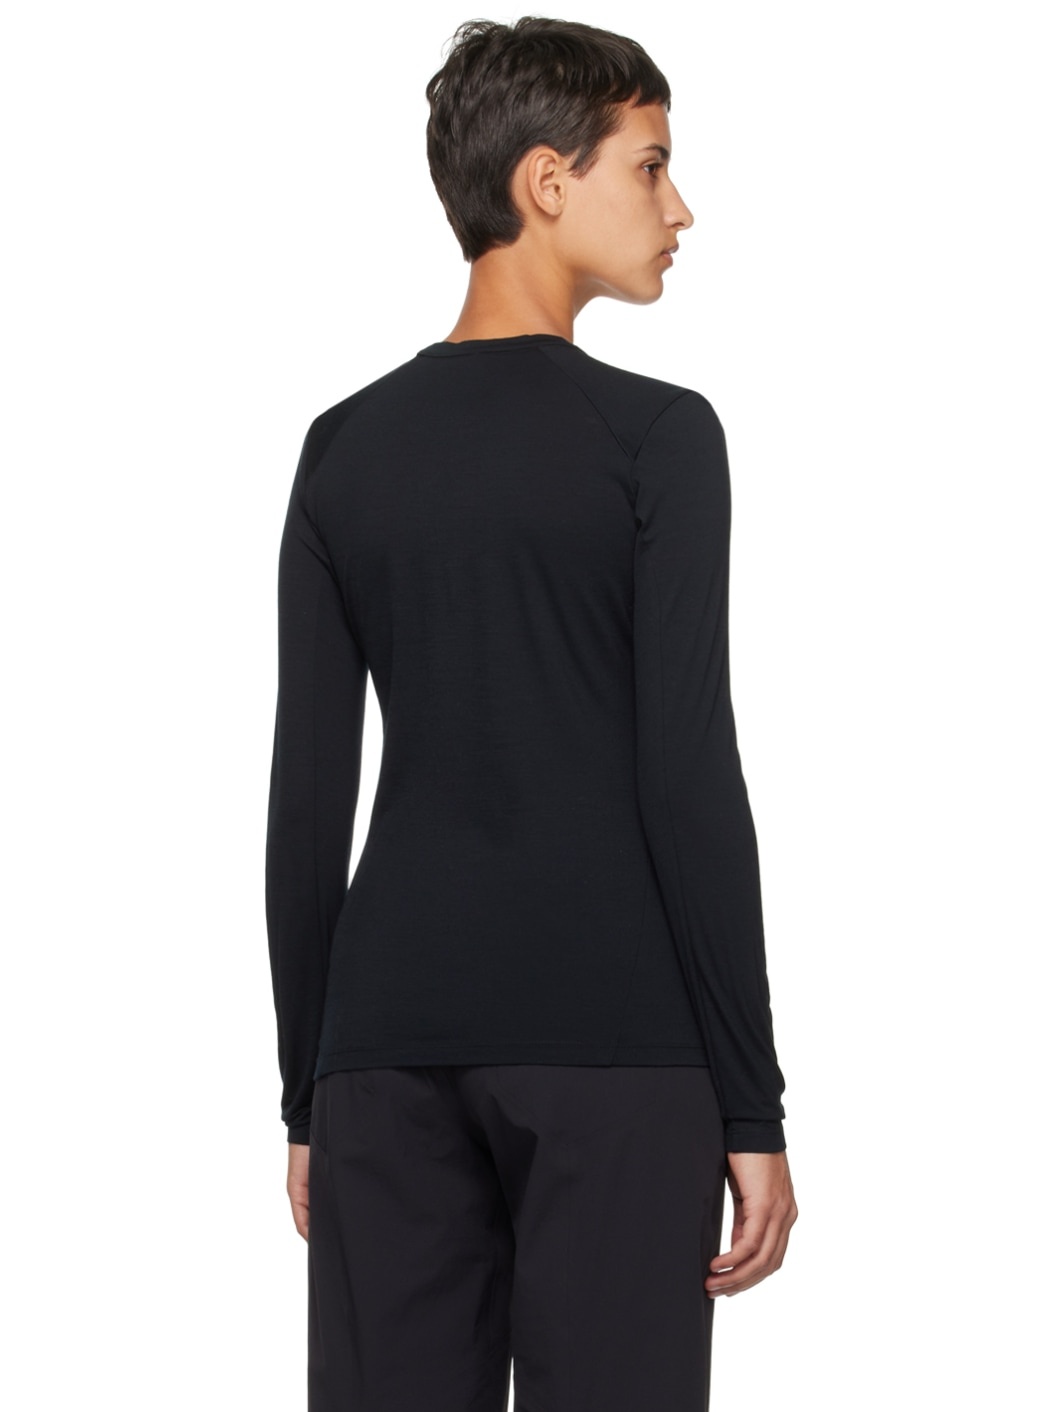 Black Frame Long Sleeve T-Shirt - 3